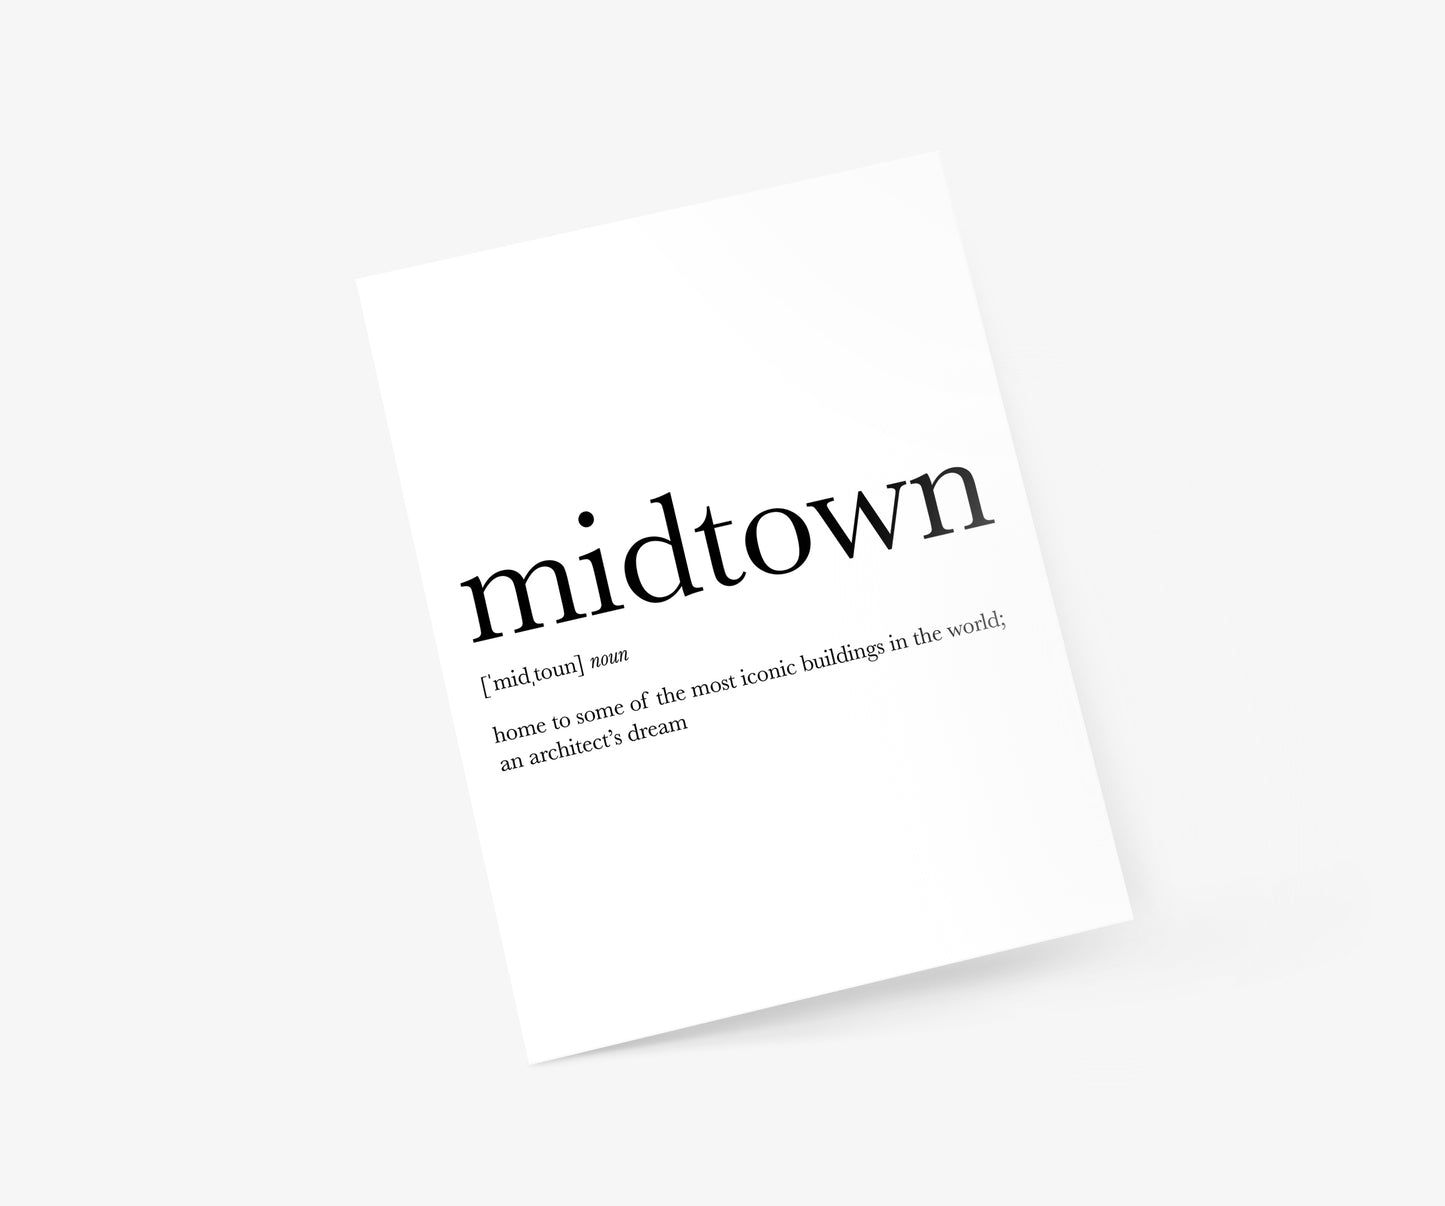 Midtown Definition - New York City